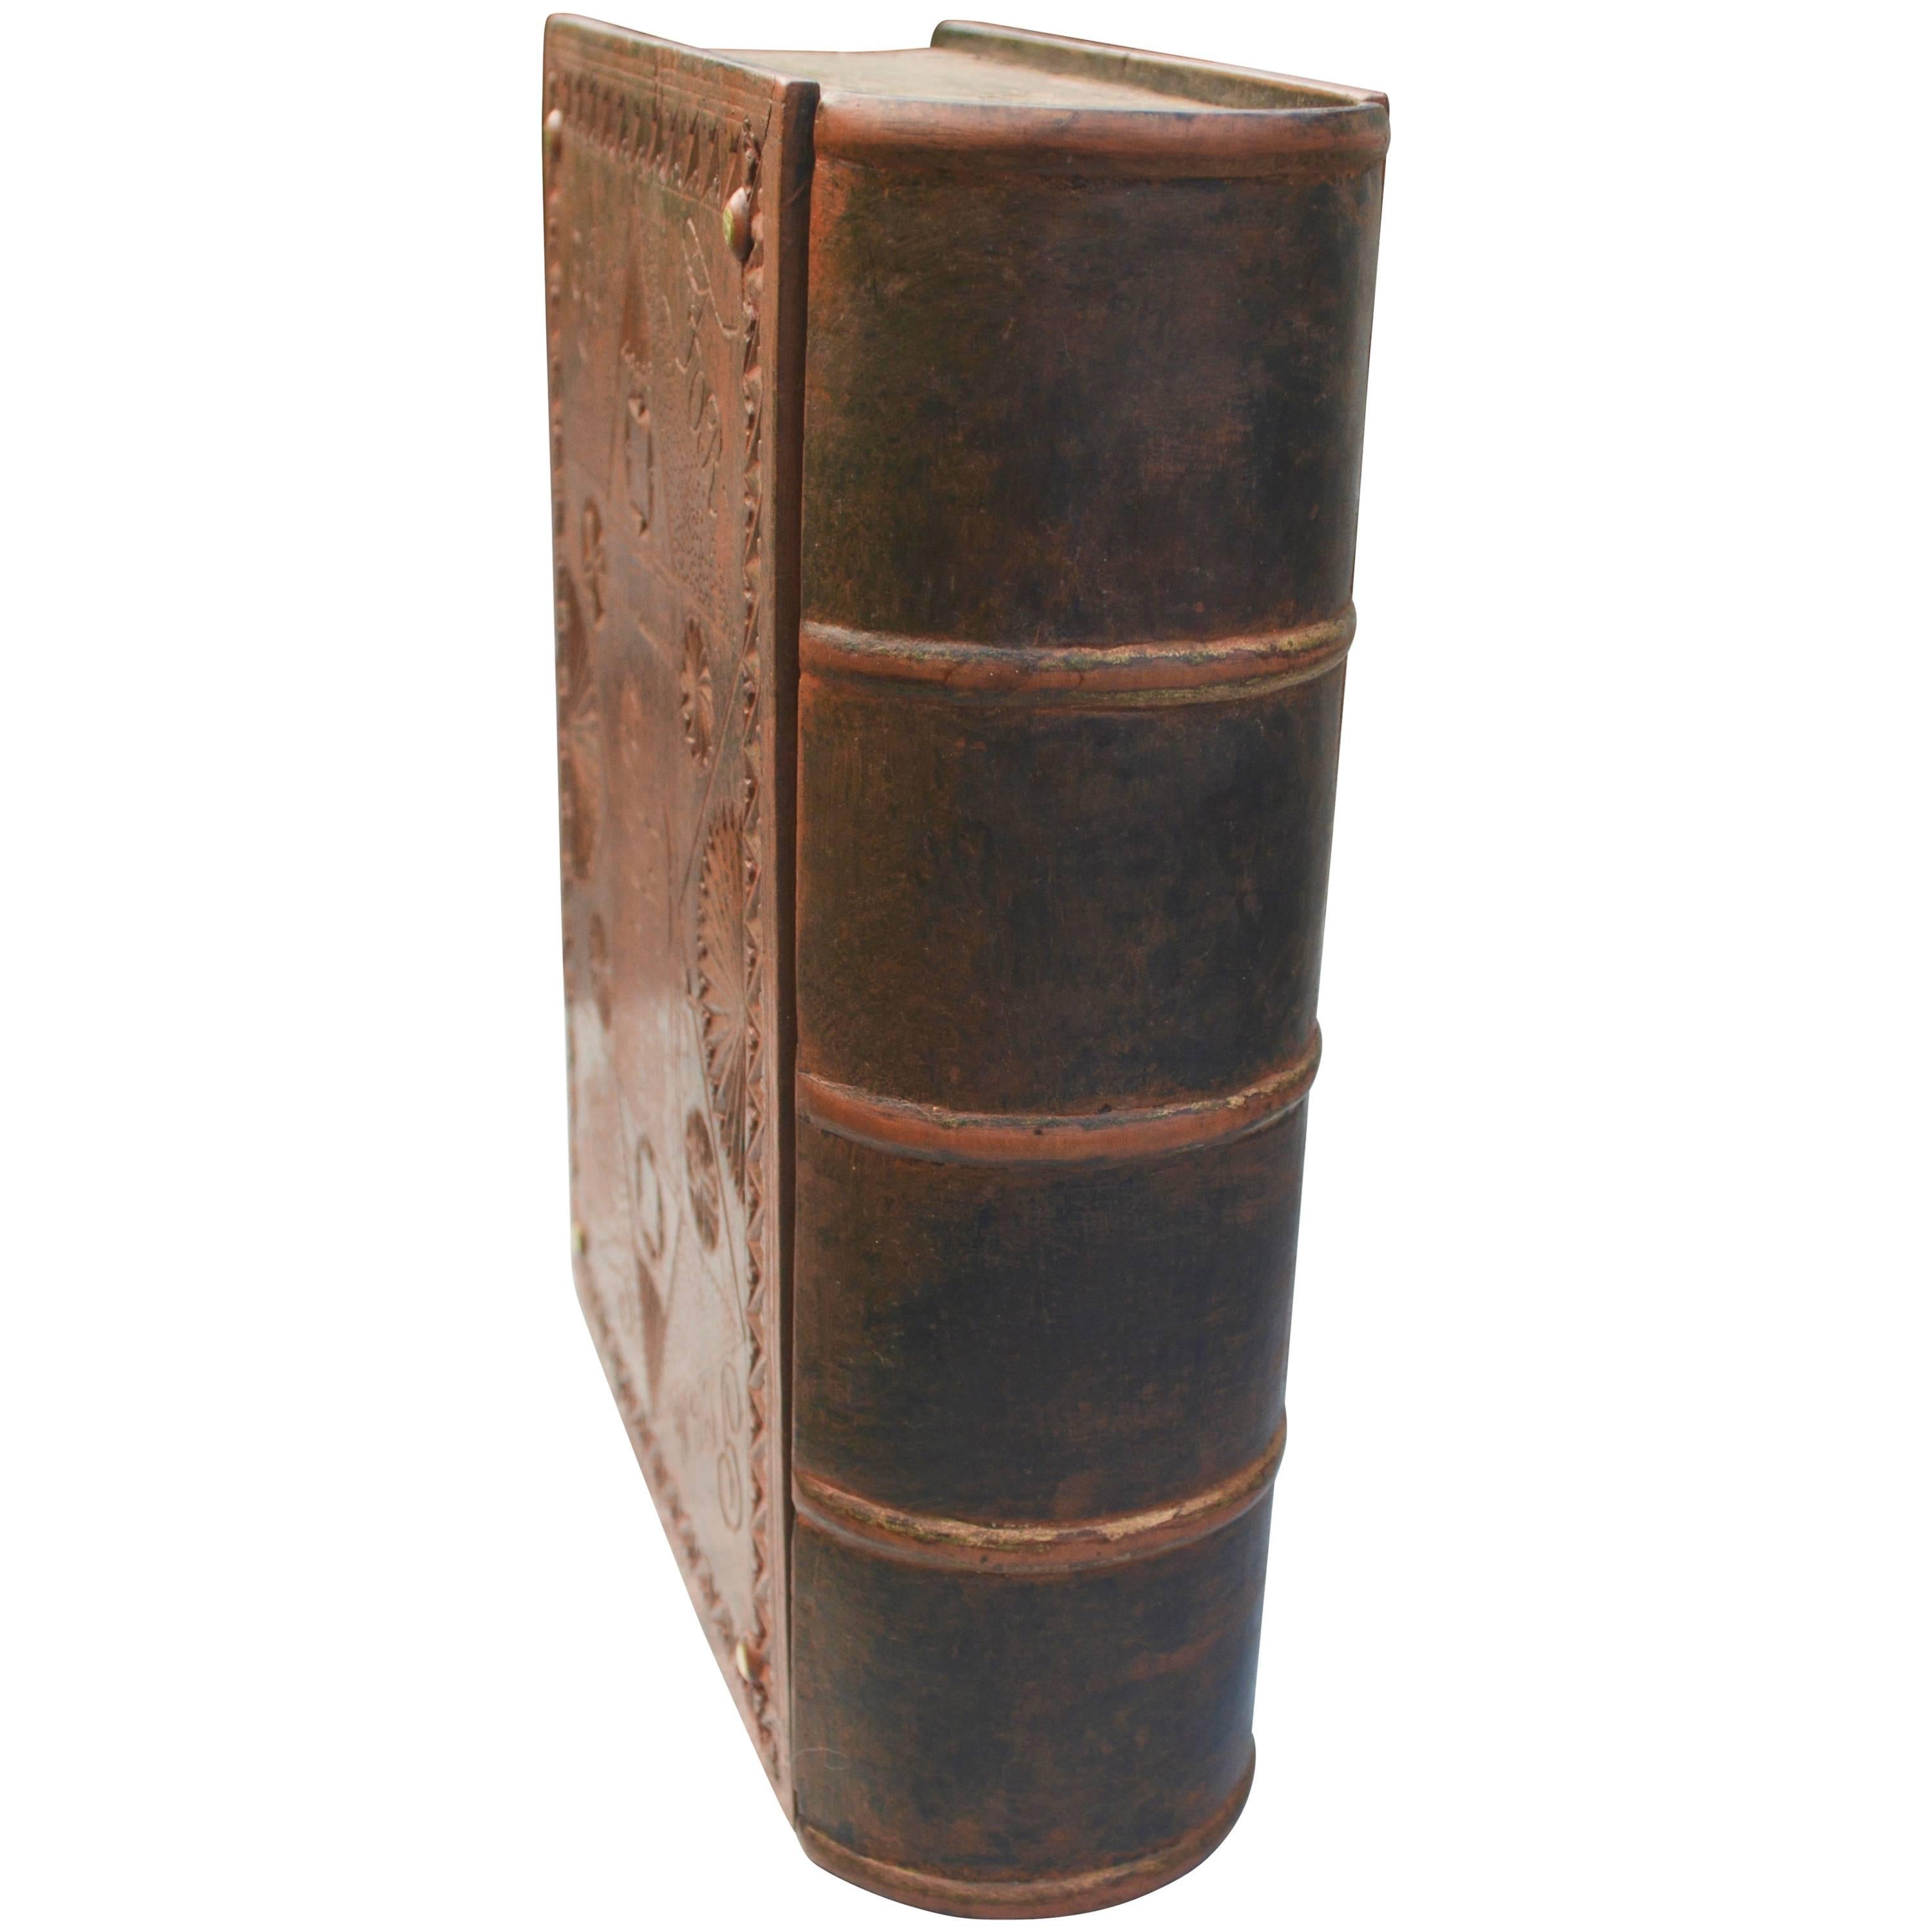 Holz-Bibelschachtel „Forget Me Not“ aus dem 19. Jahrhundert mit verstecktem Fach